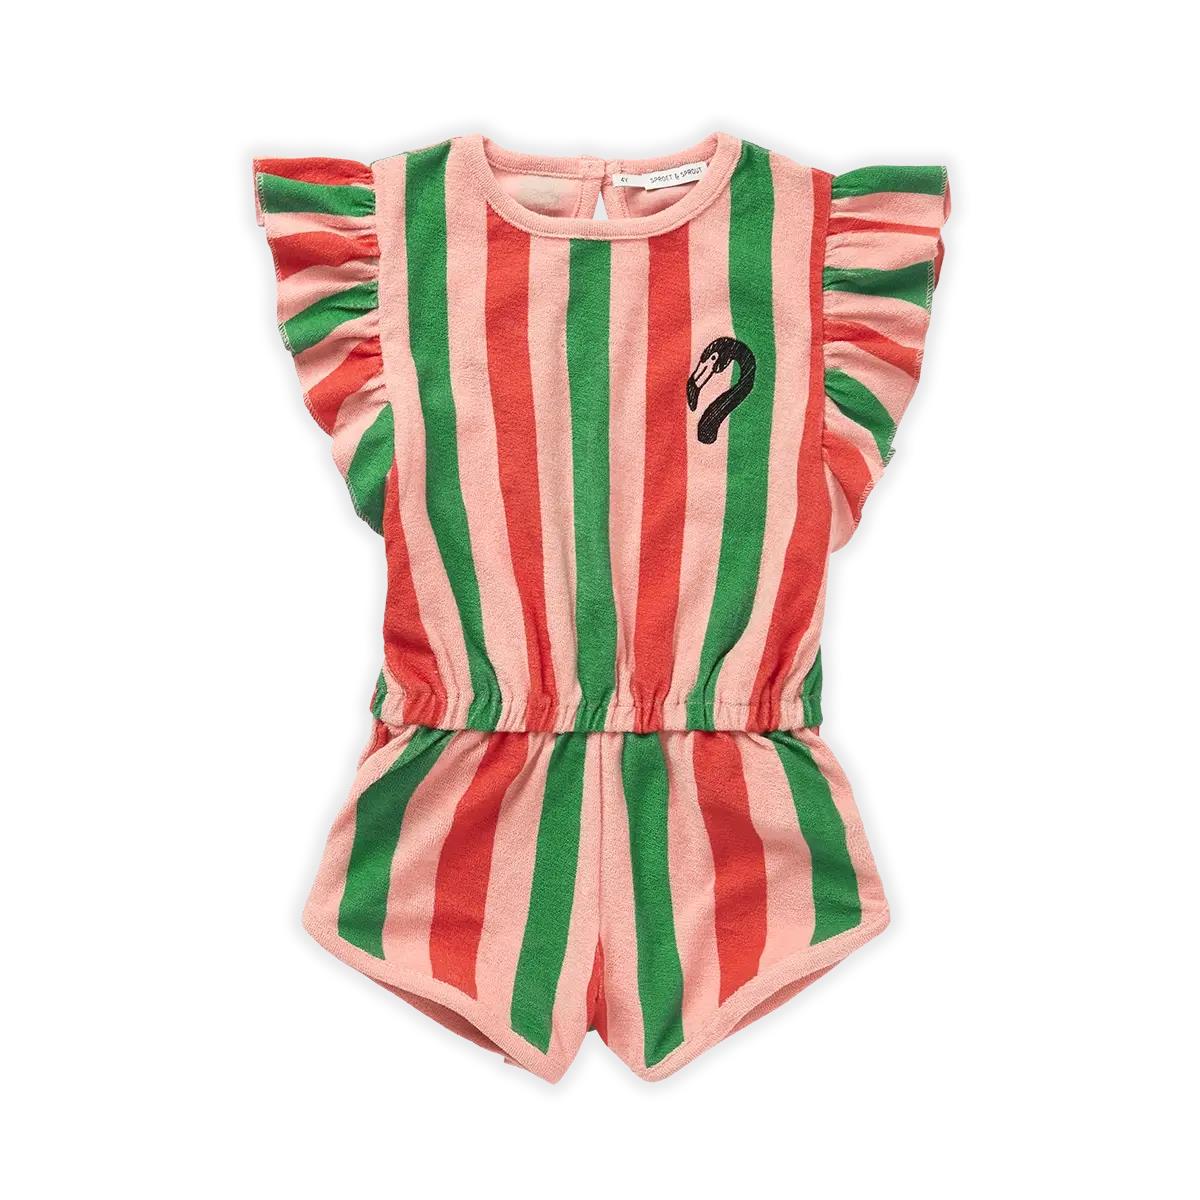 SPROET & SPROUT - Girls jumpsuit stripe print